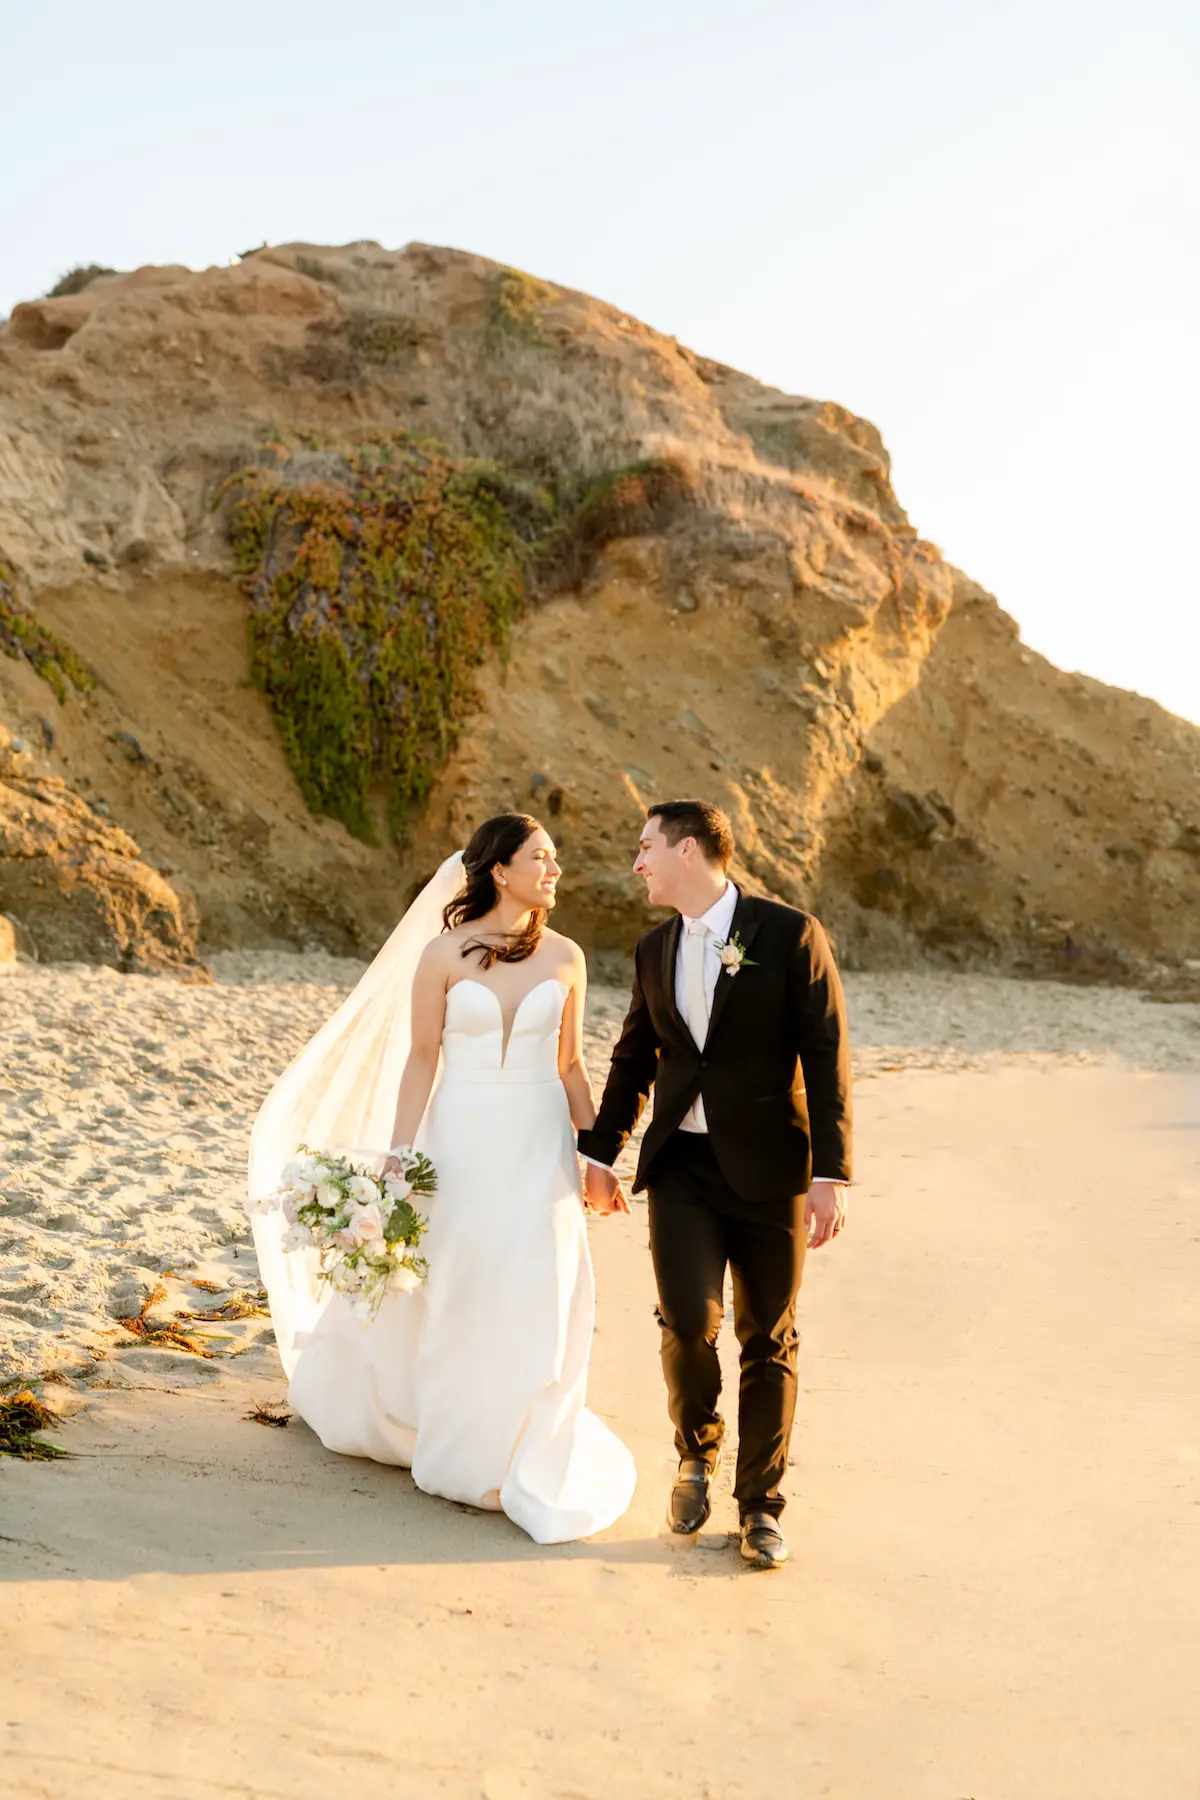 Beach wedding photos - Holly Sigafoos Photo